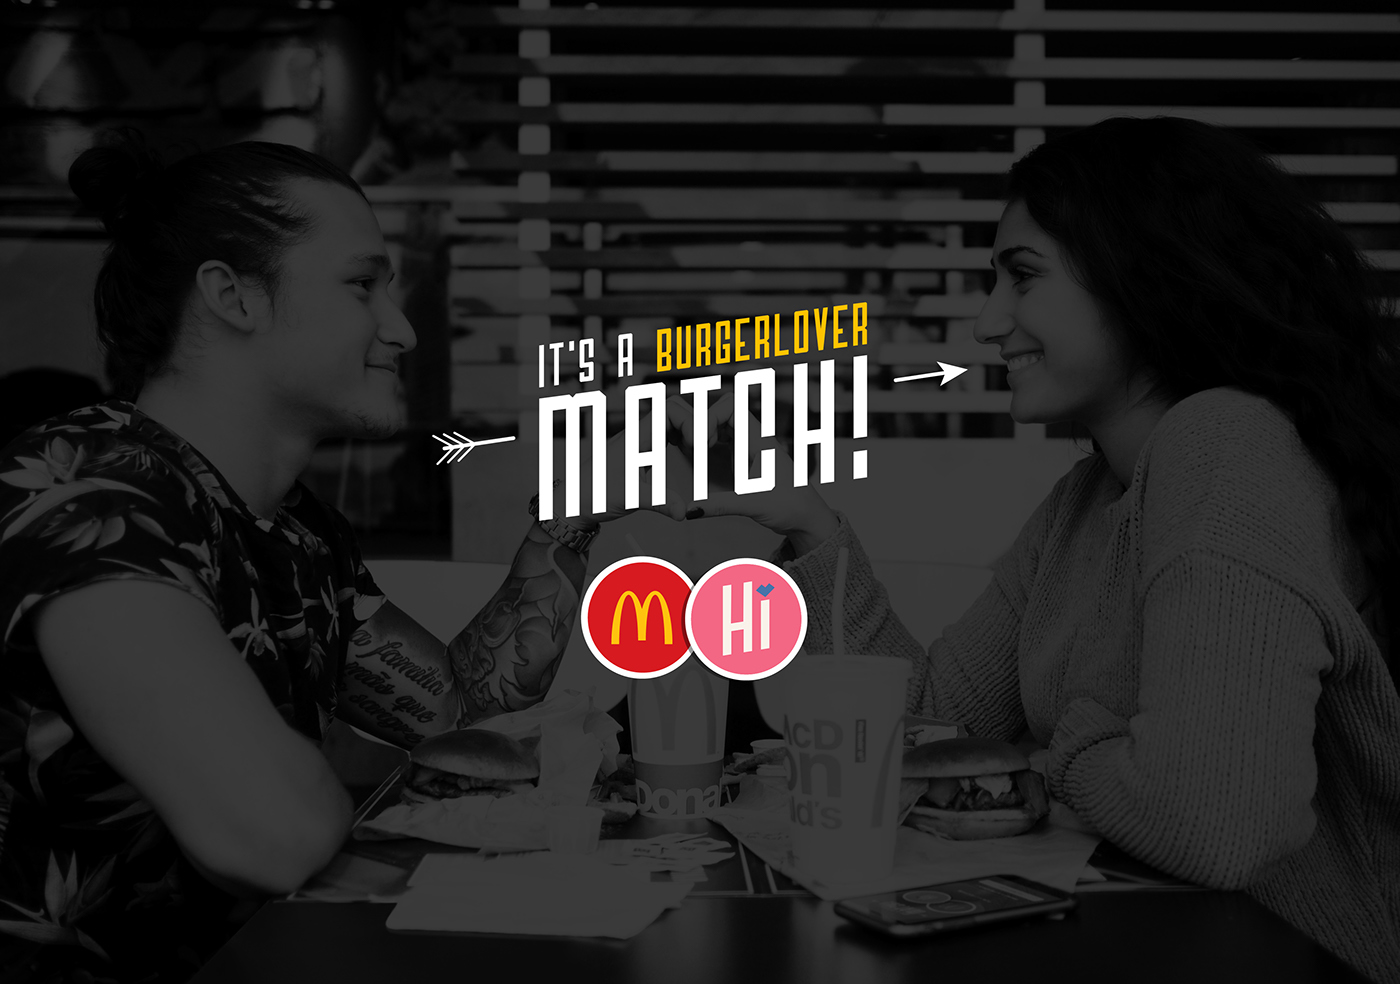 mcdonald's Dating app print pr Advertising  Sweden Love Food  burger